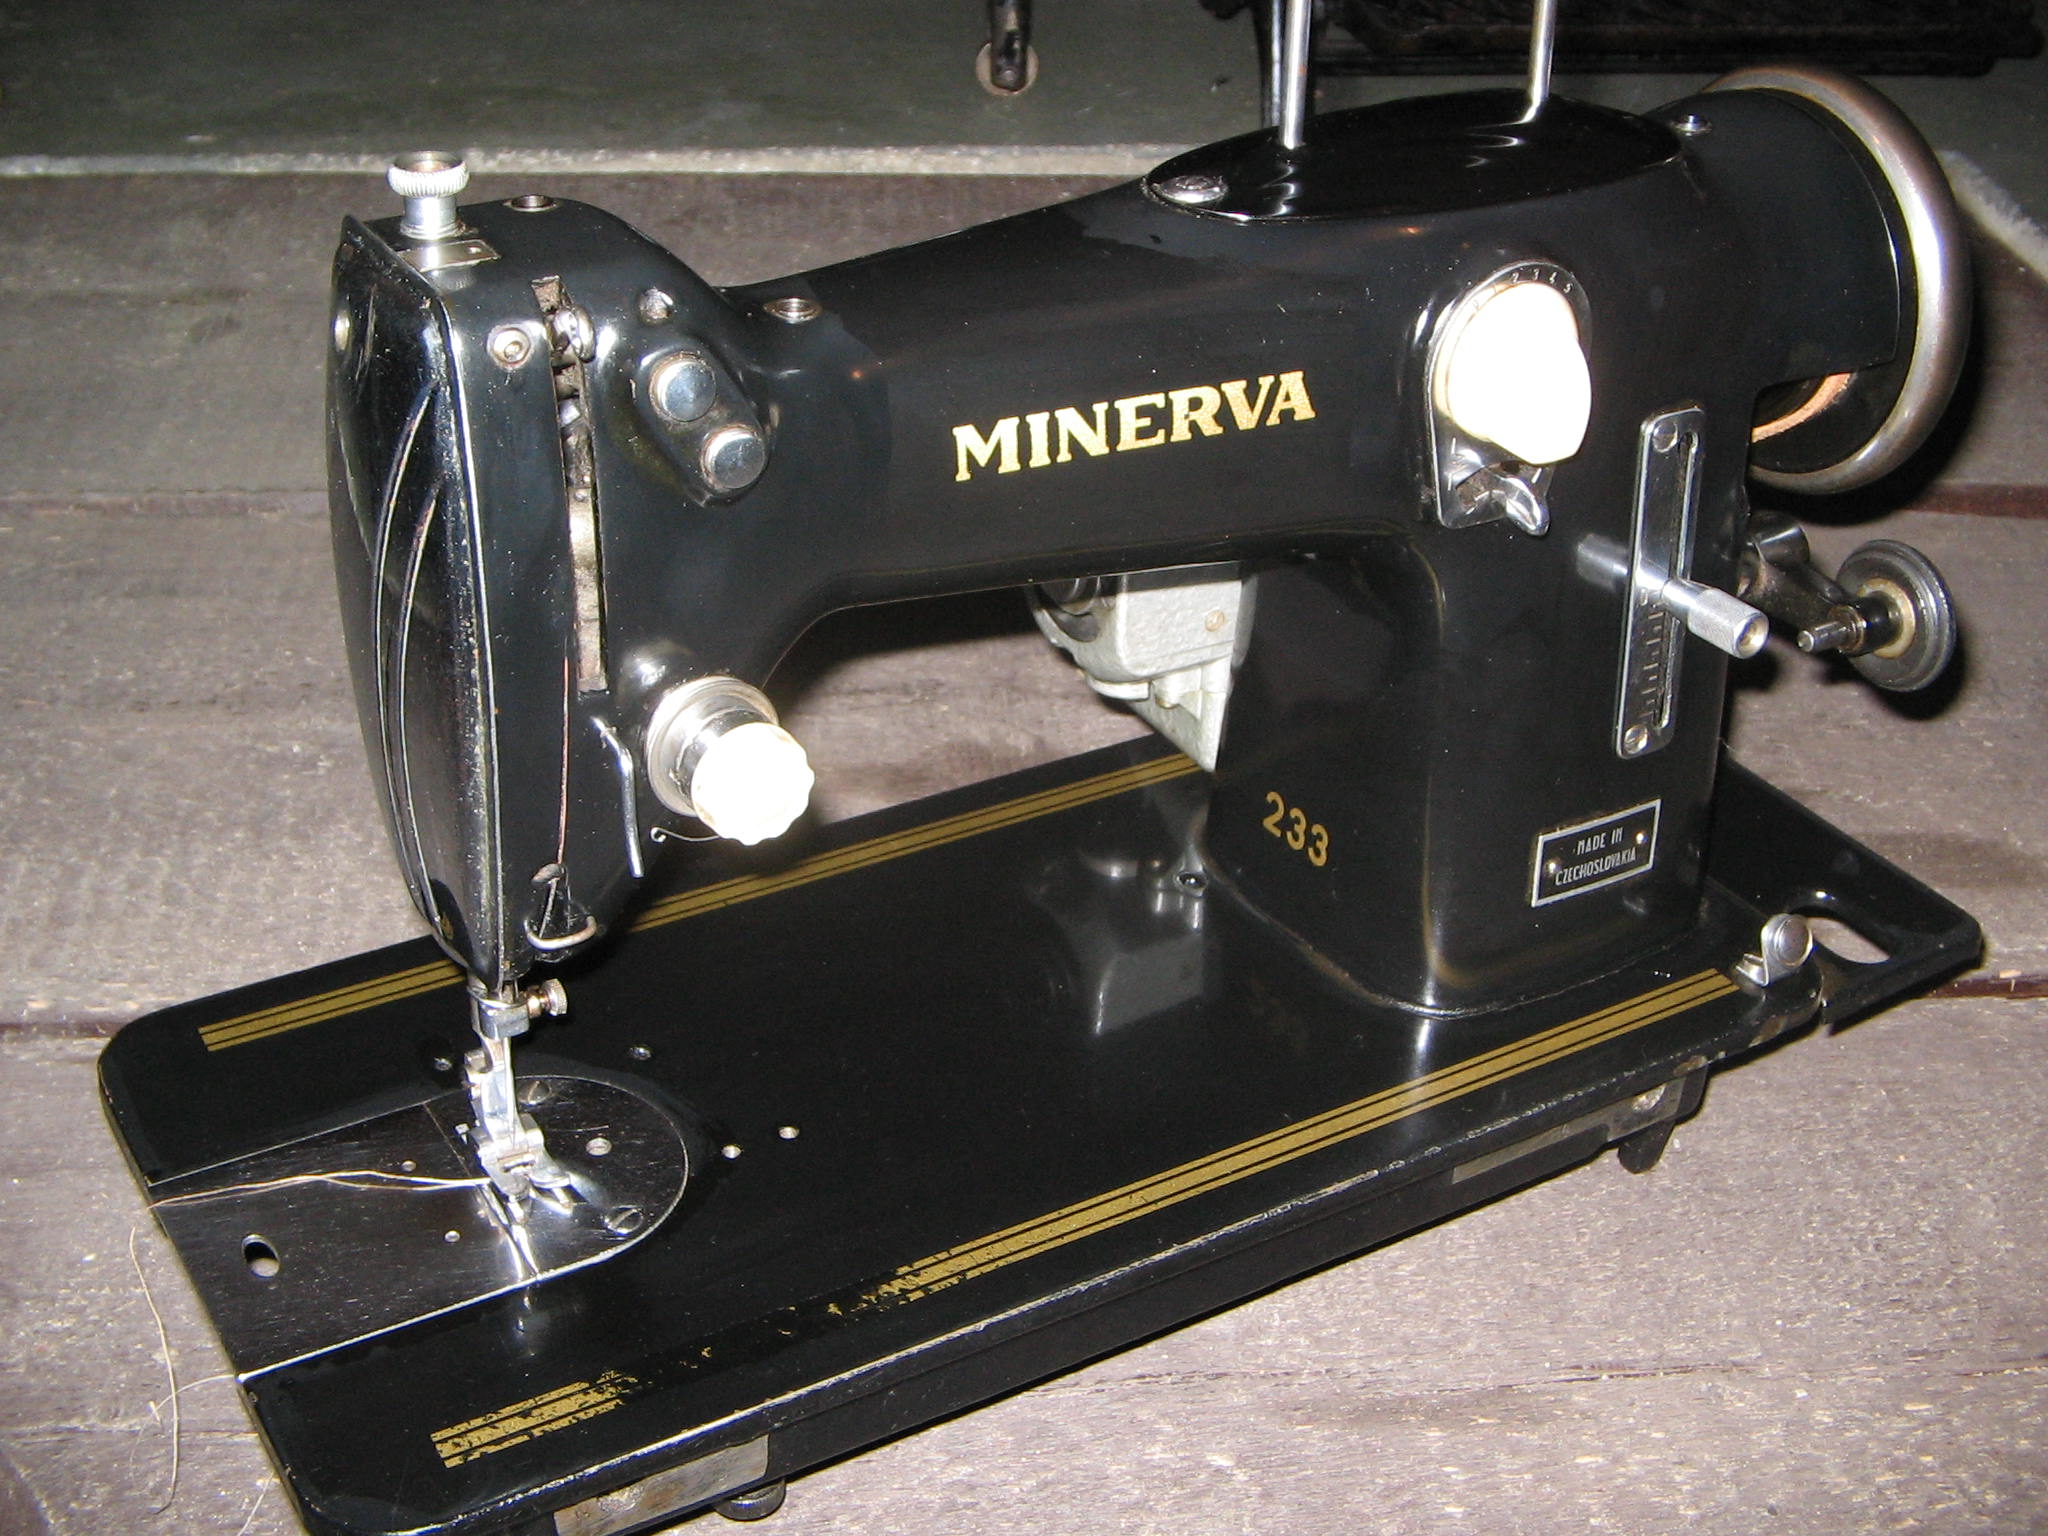 Minerva 233.jpg